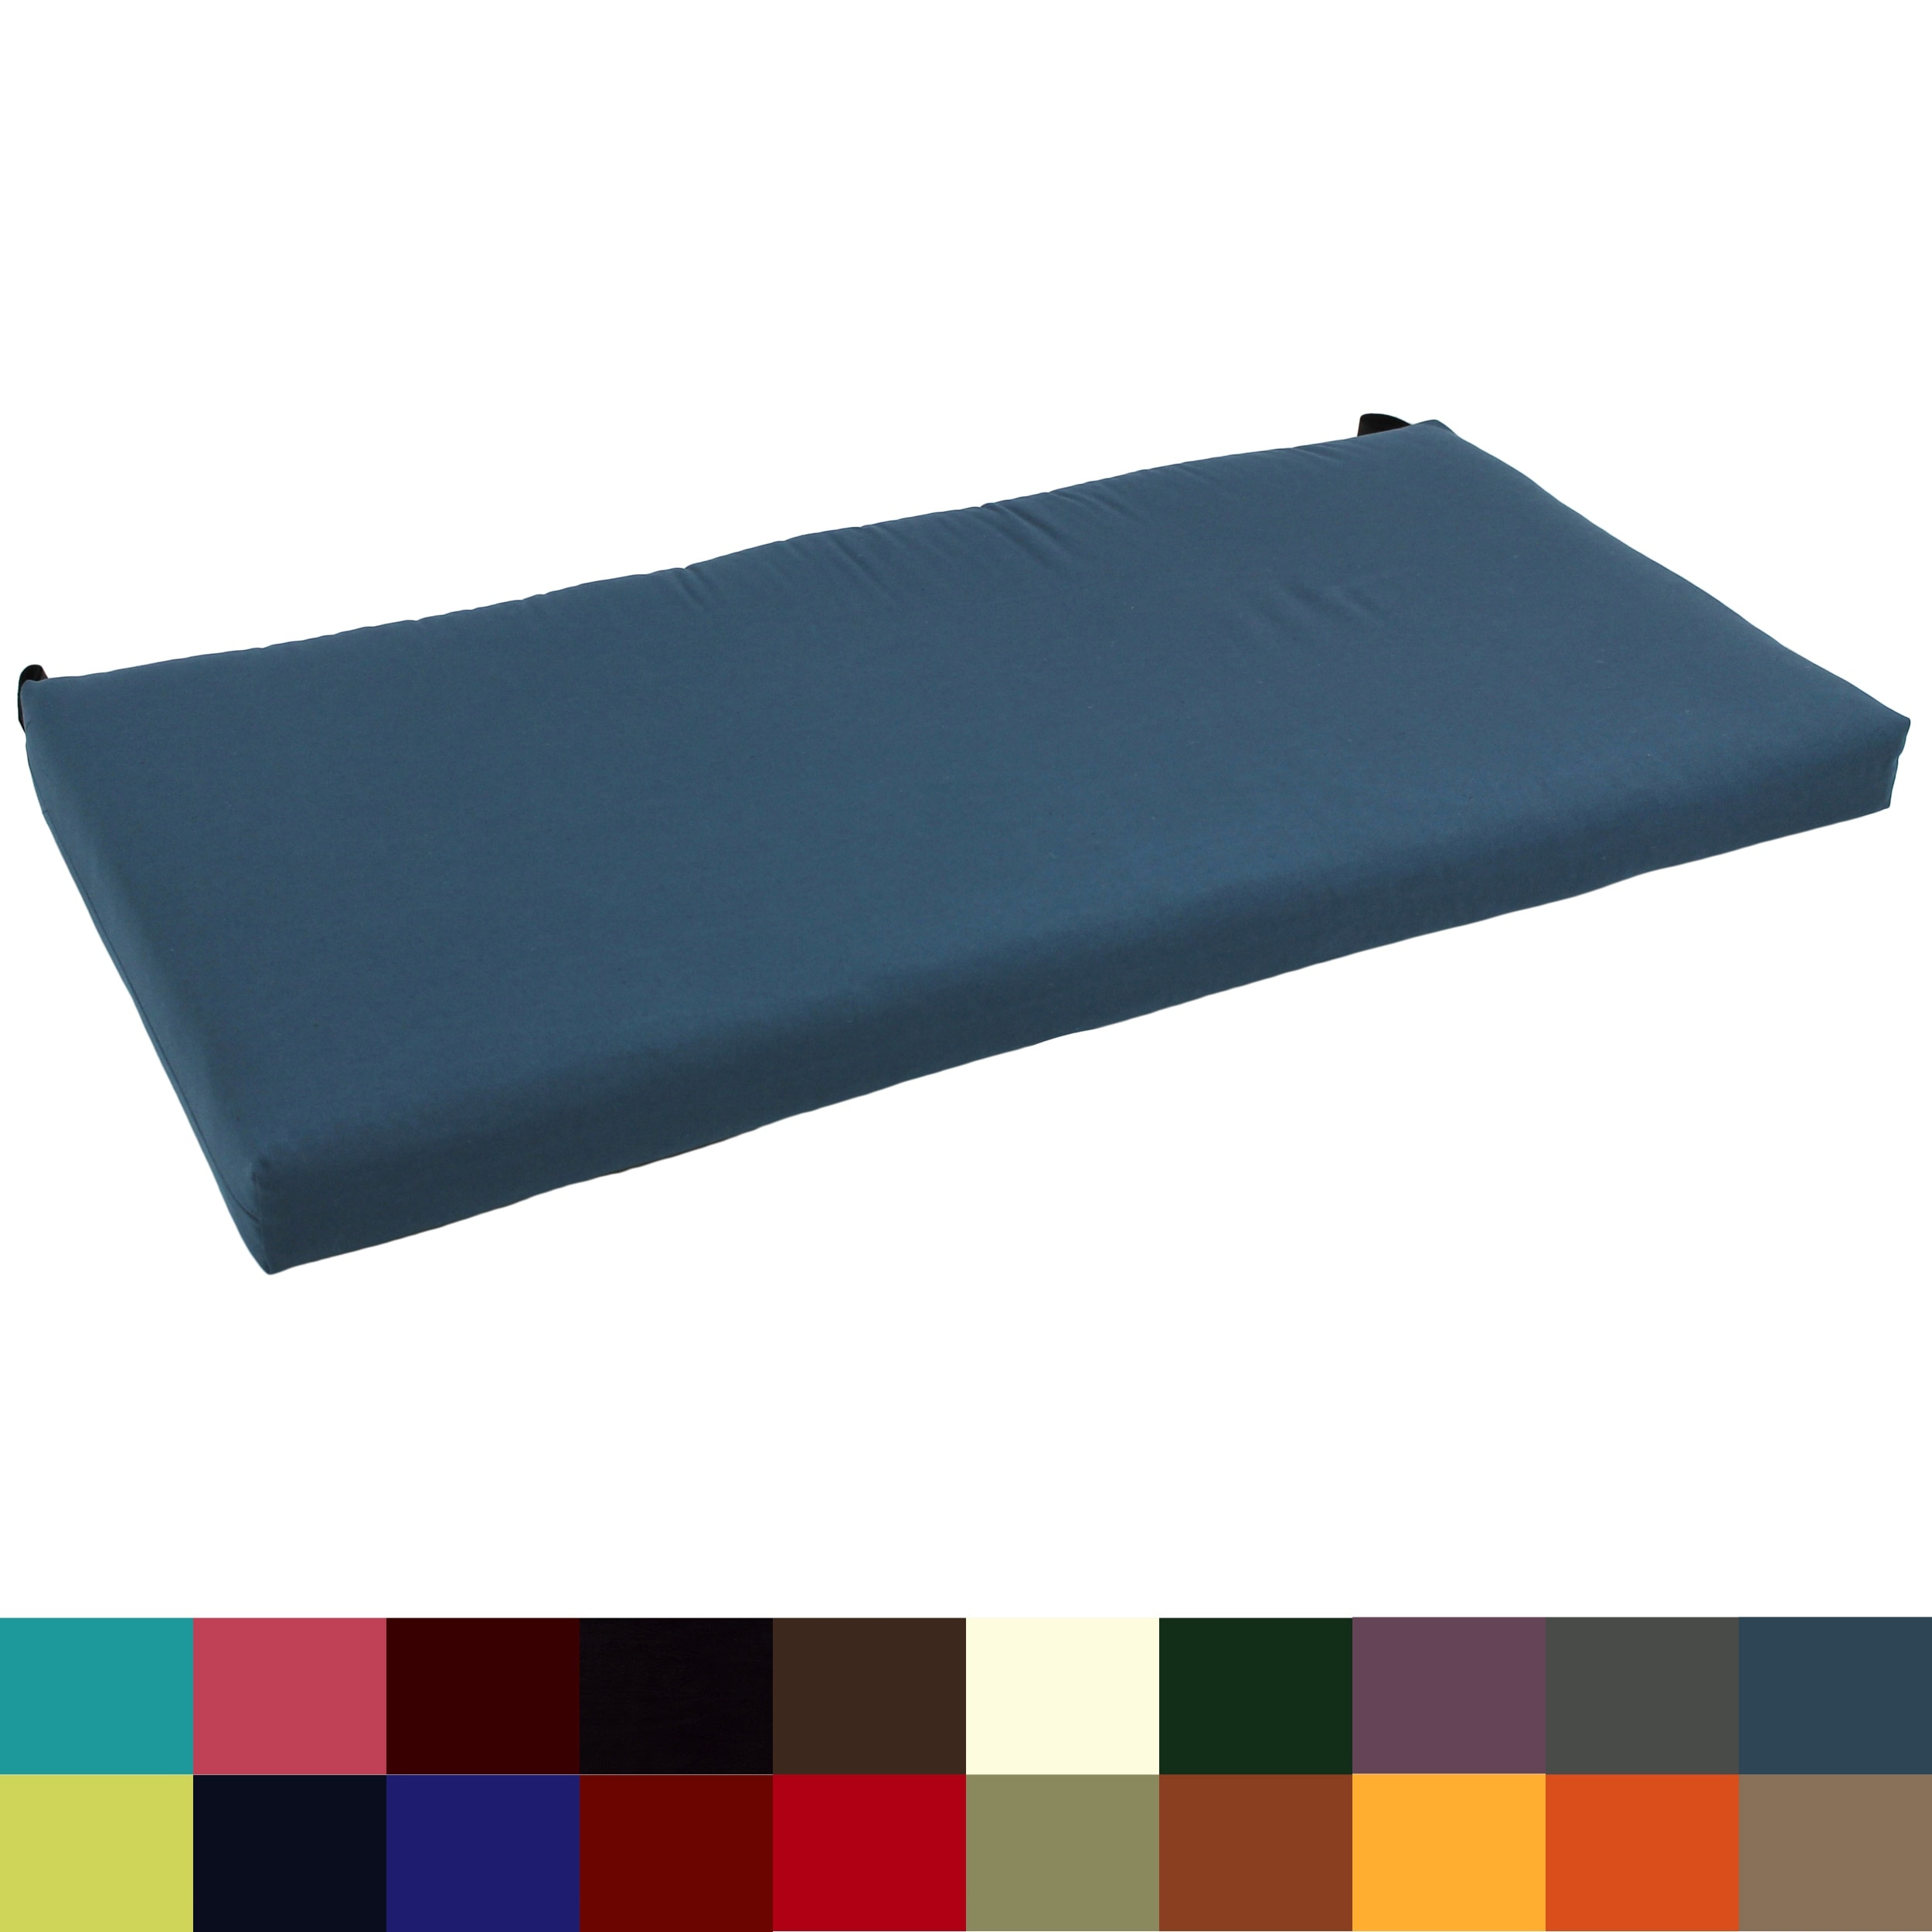  Blazing Needles Microsuede Bench Cushion, 60 x 19